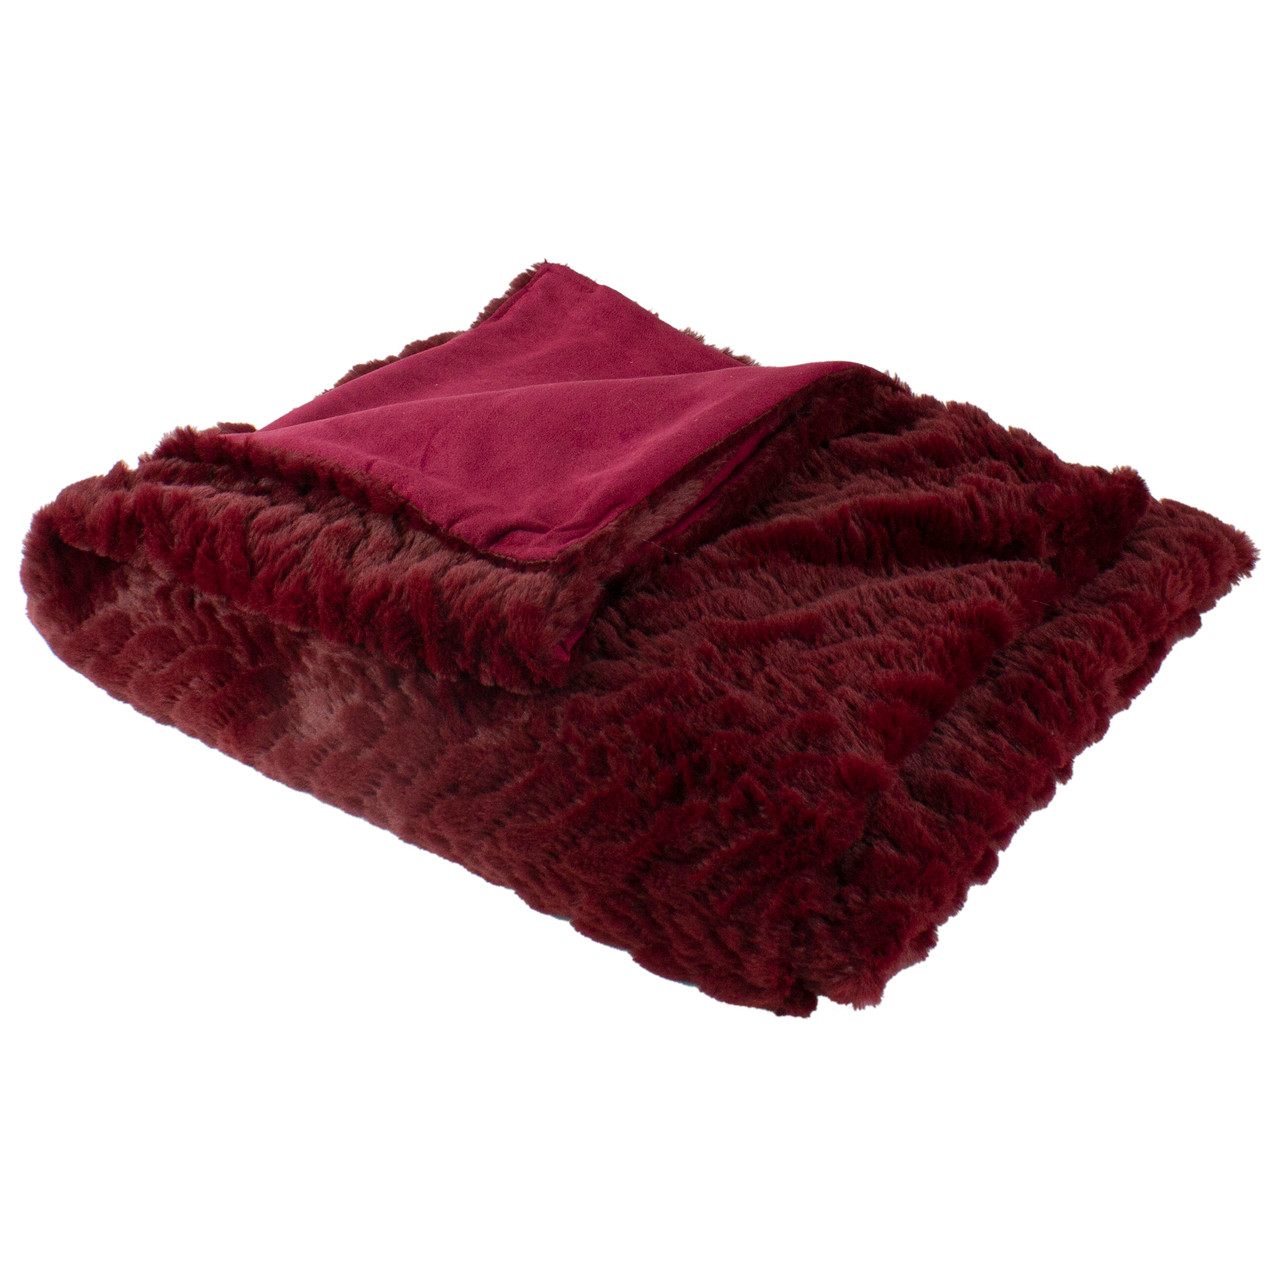 plush burgundy red throw blanket